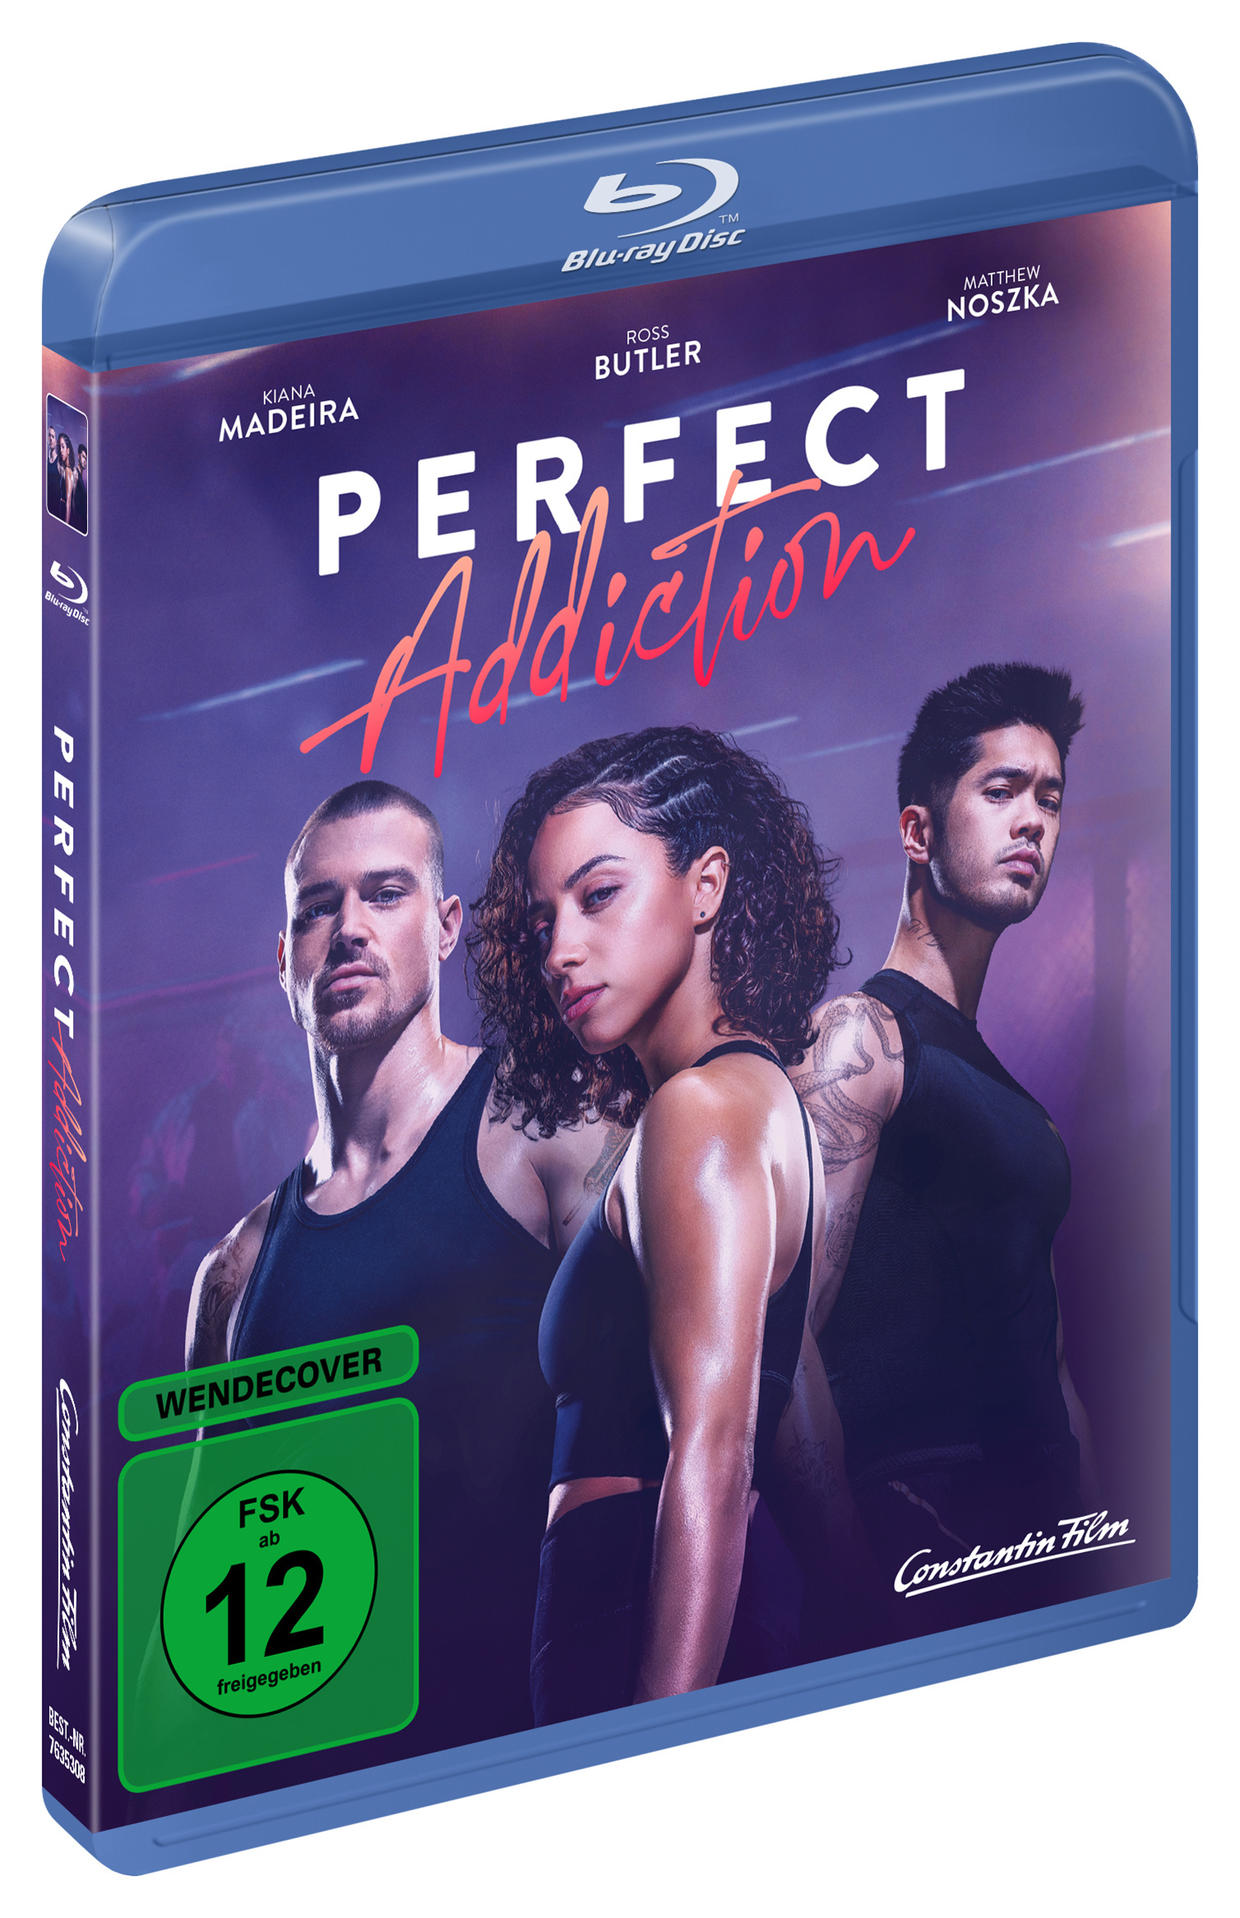 Perfect Addiction Blu-ray